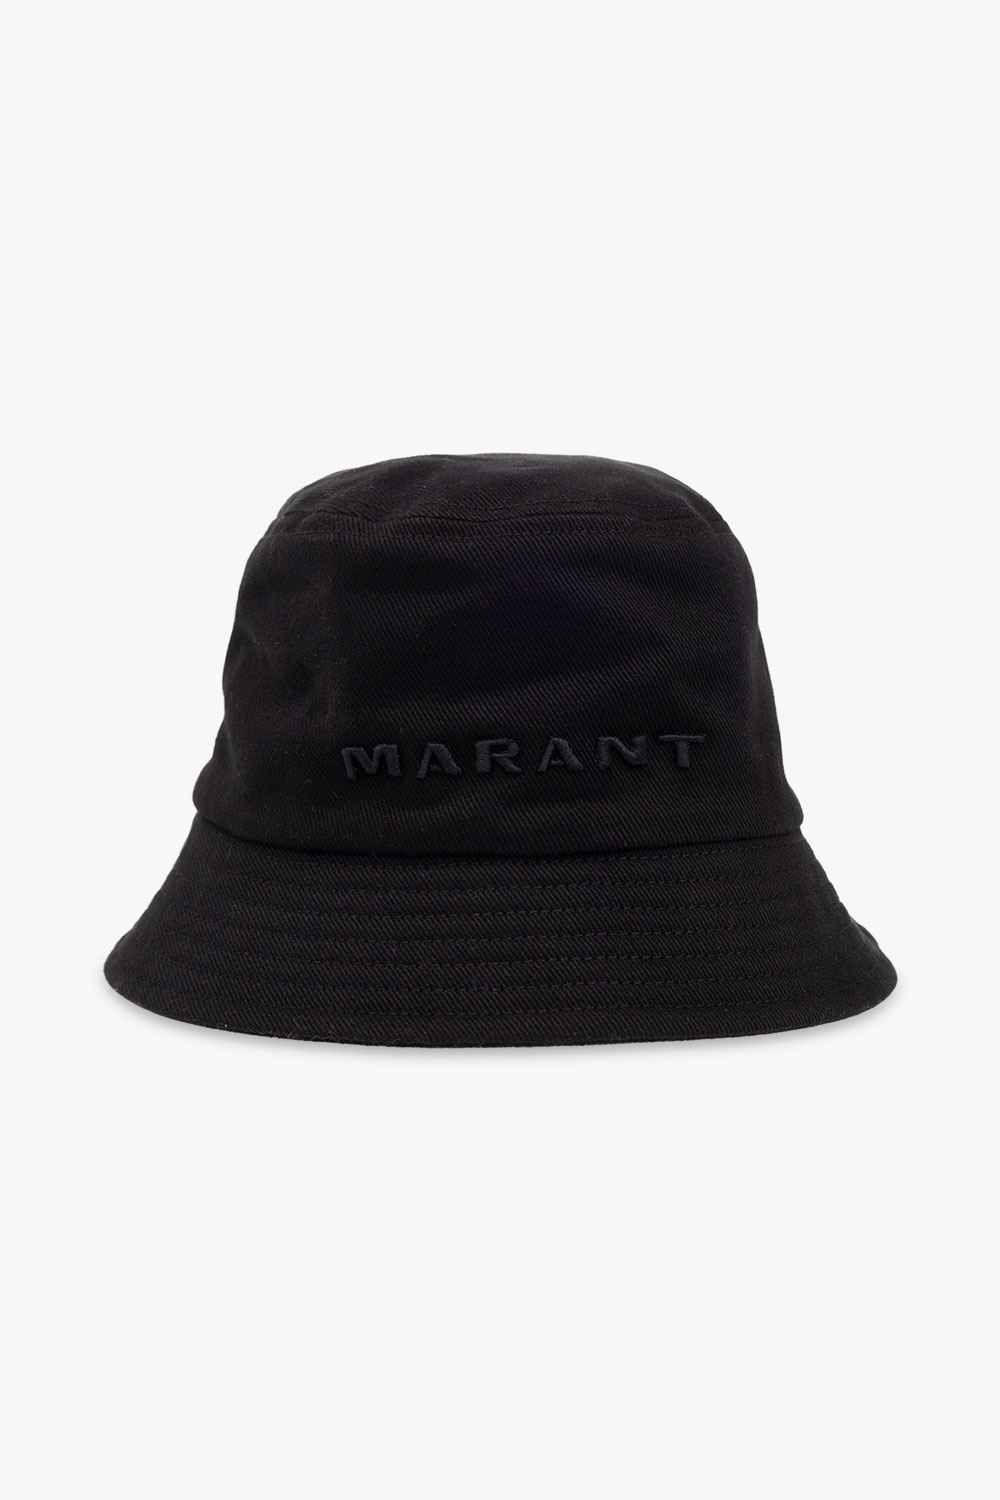 MARANT ‘Haley’ bucket Make hat with logo